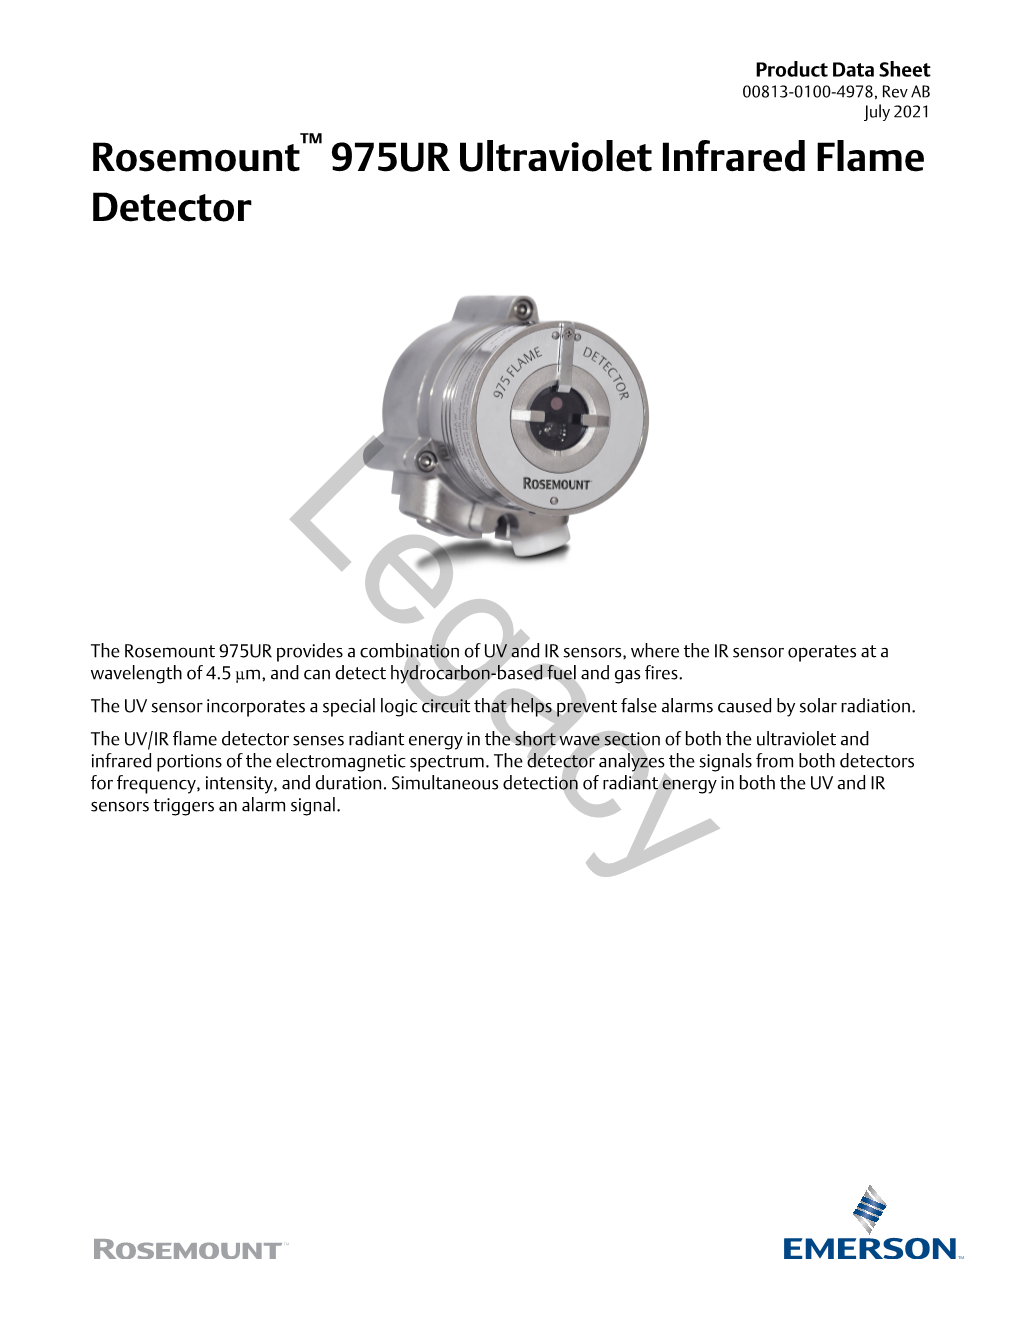 Rosemount 975UR Ultraviolet Infrared Flame Detector